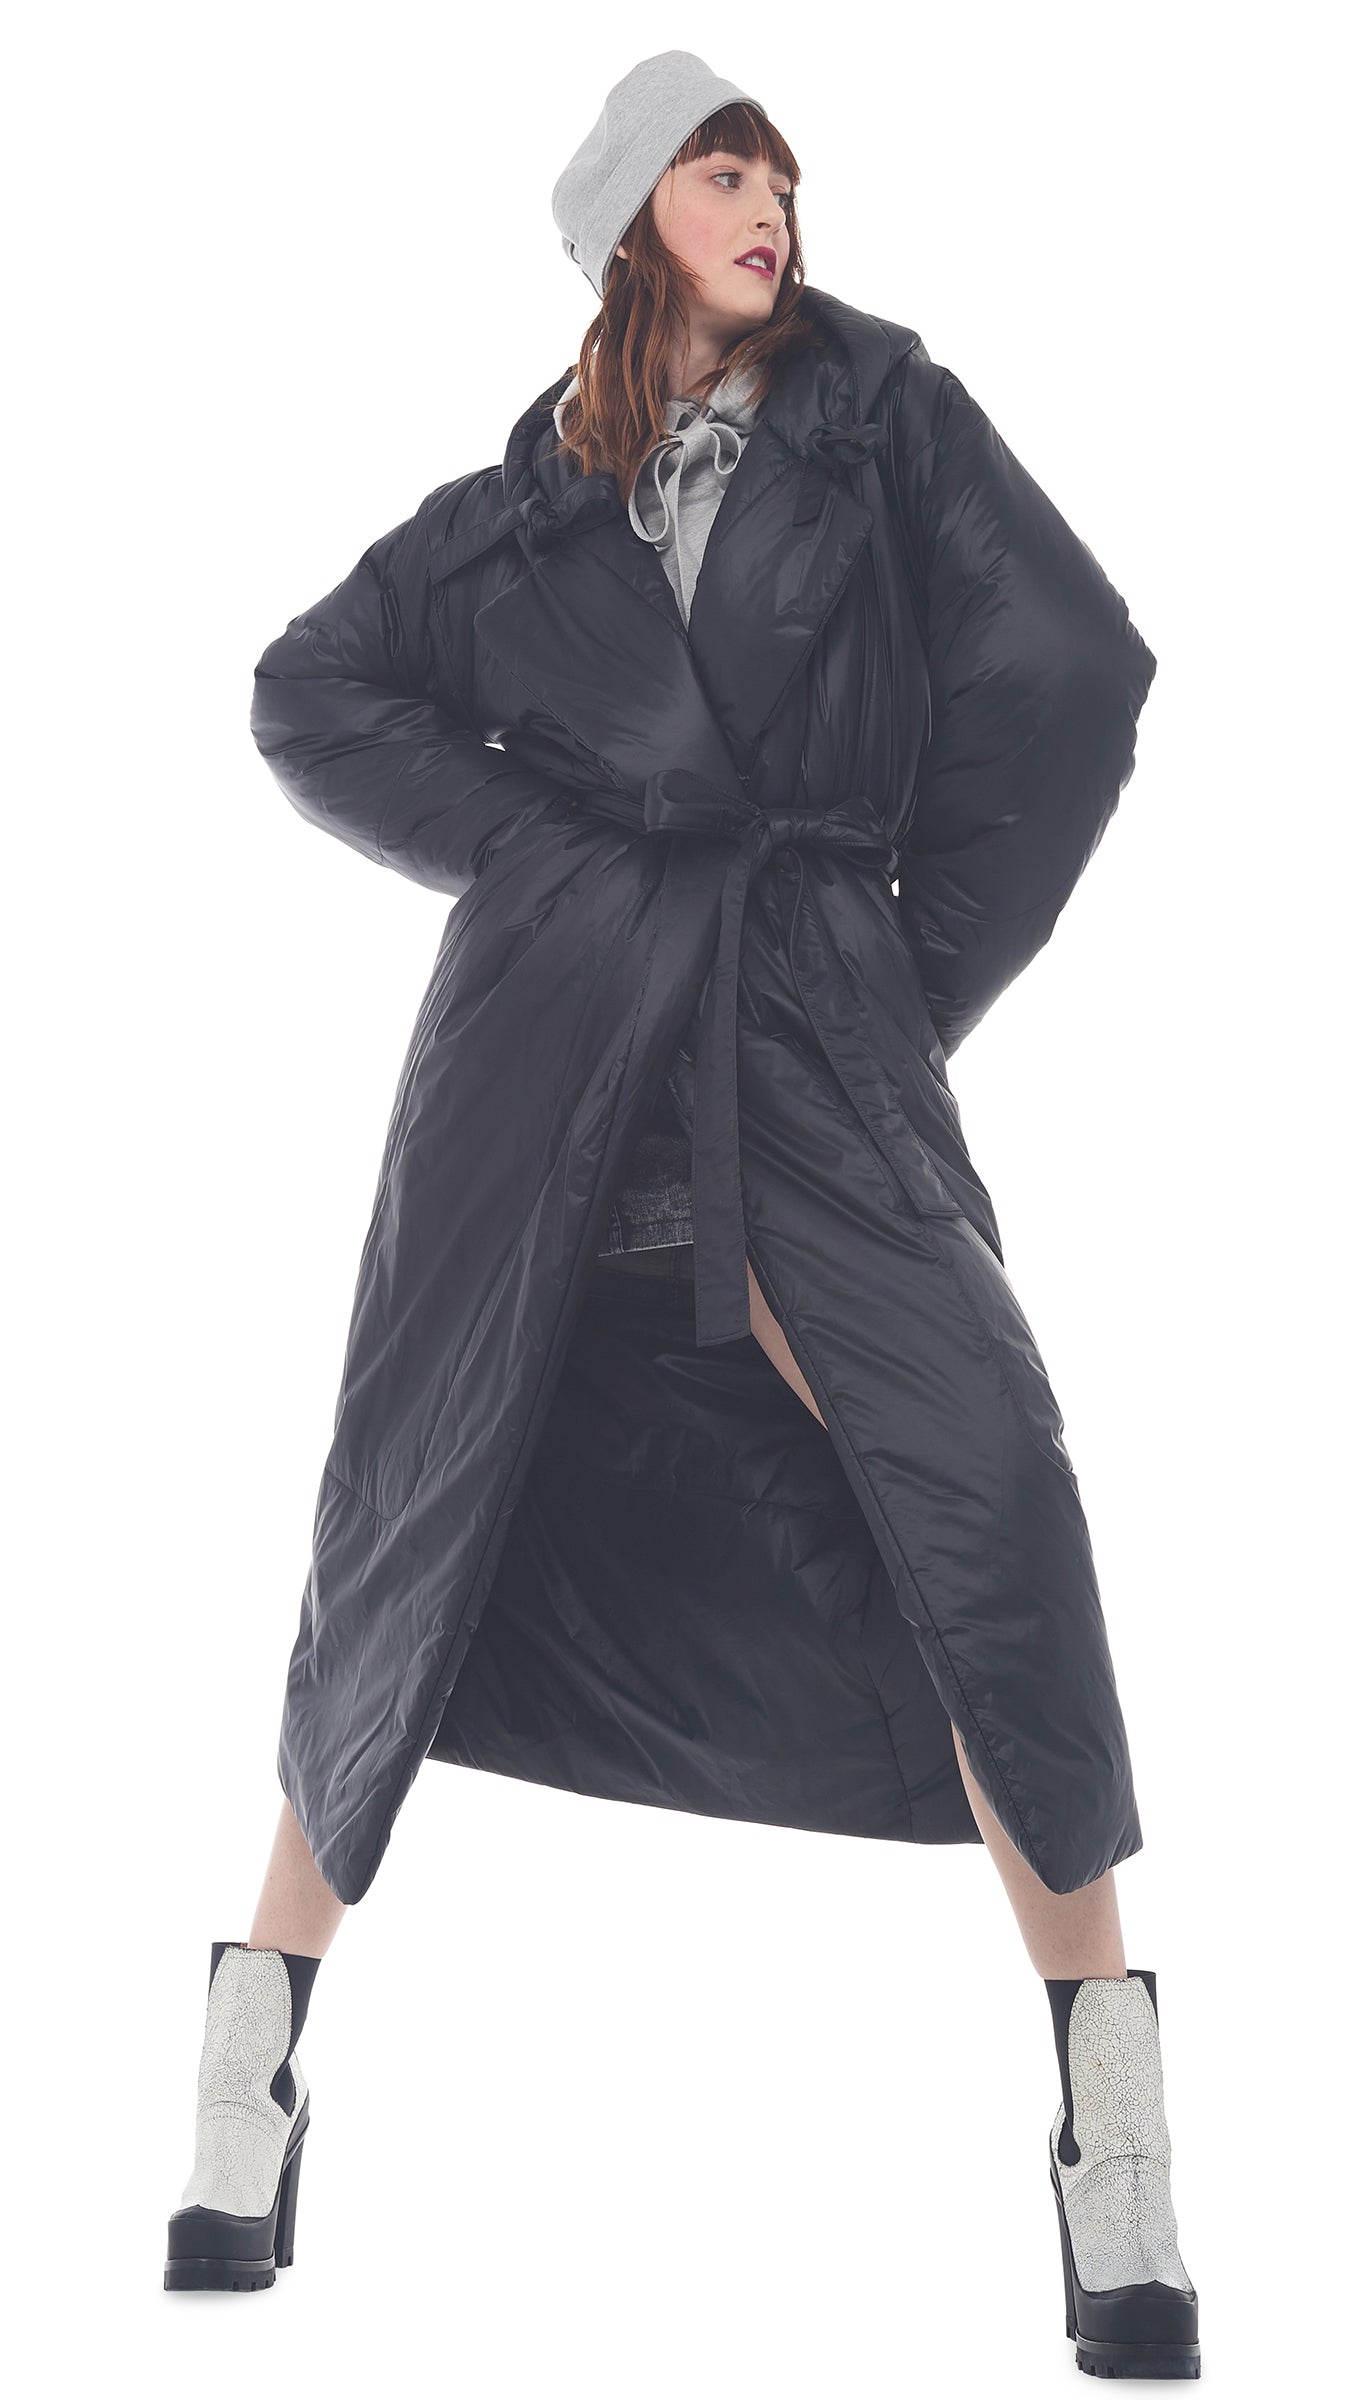 NWT Unisex NORMA KAMALI Long Sleeping Bag Coat Gray XS/S Oversized